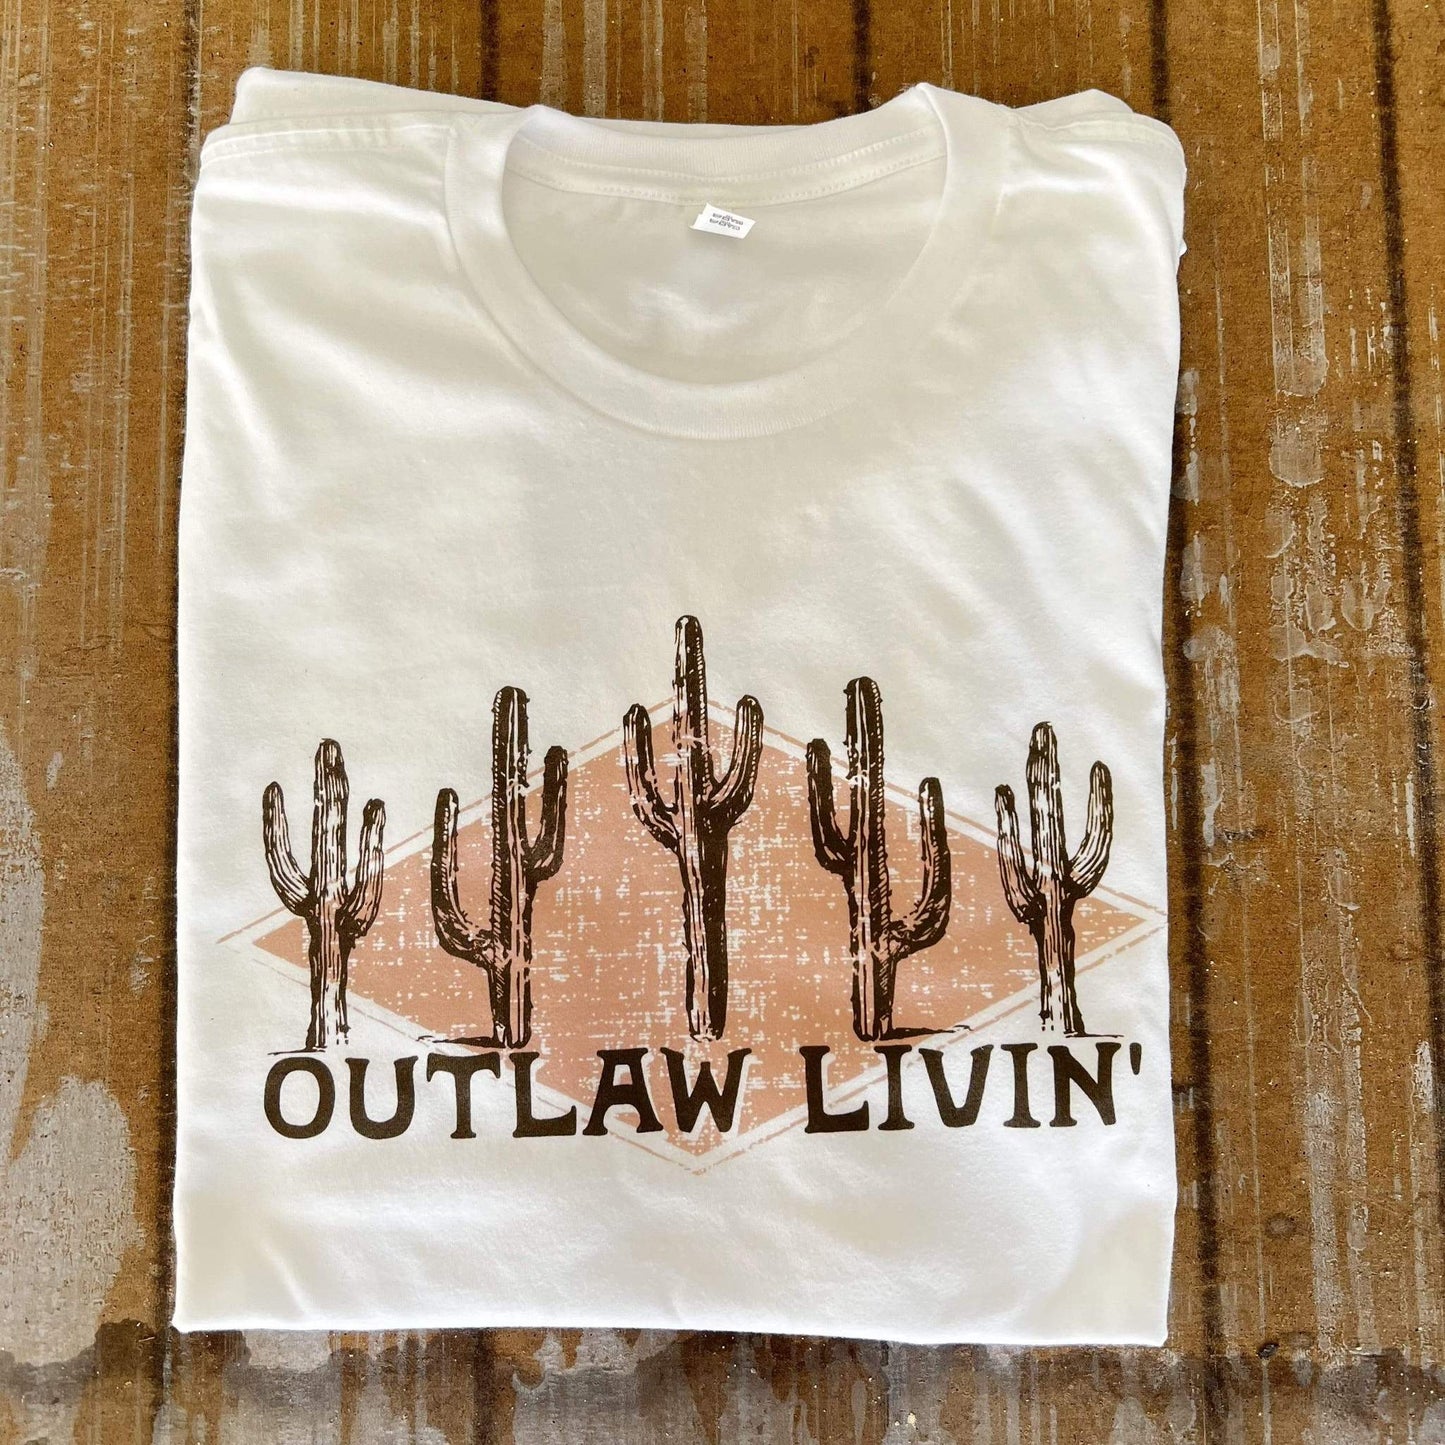 Outlaw Livin'